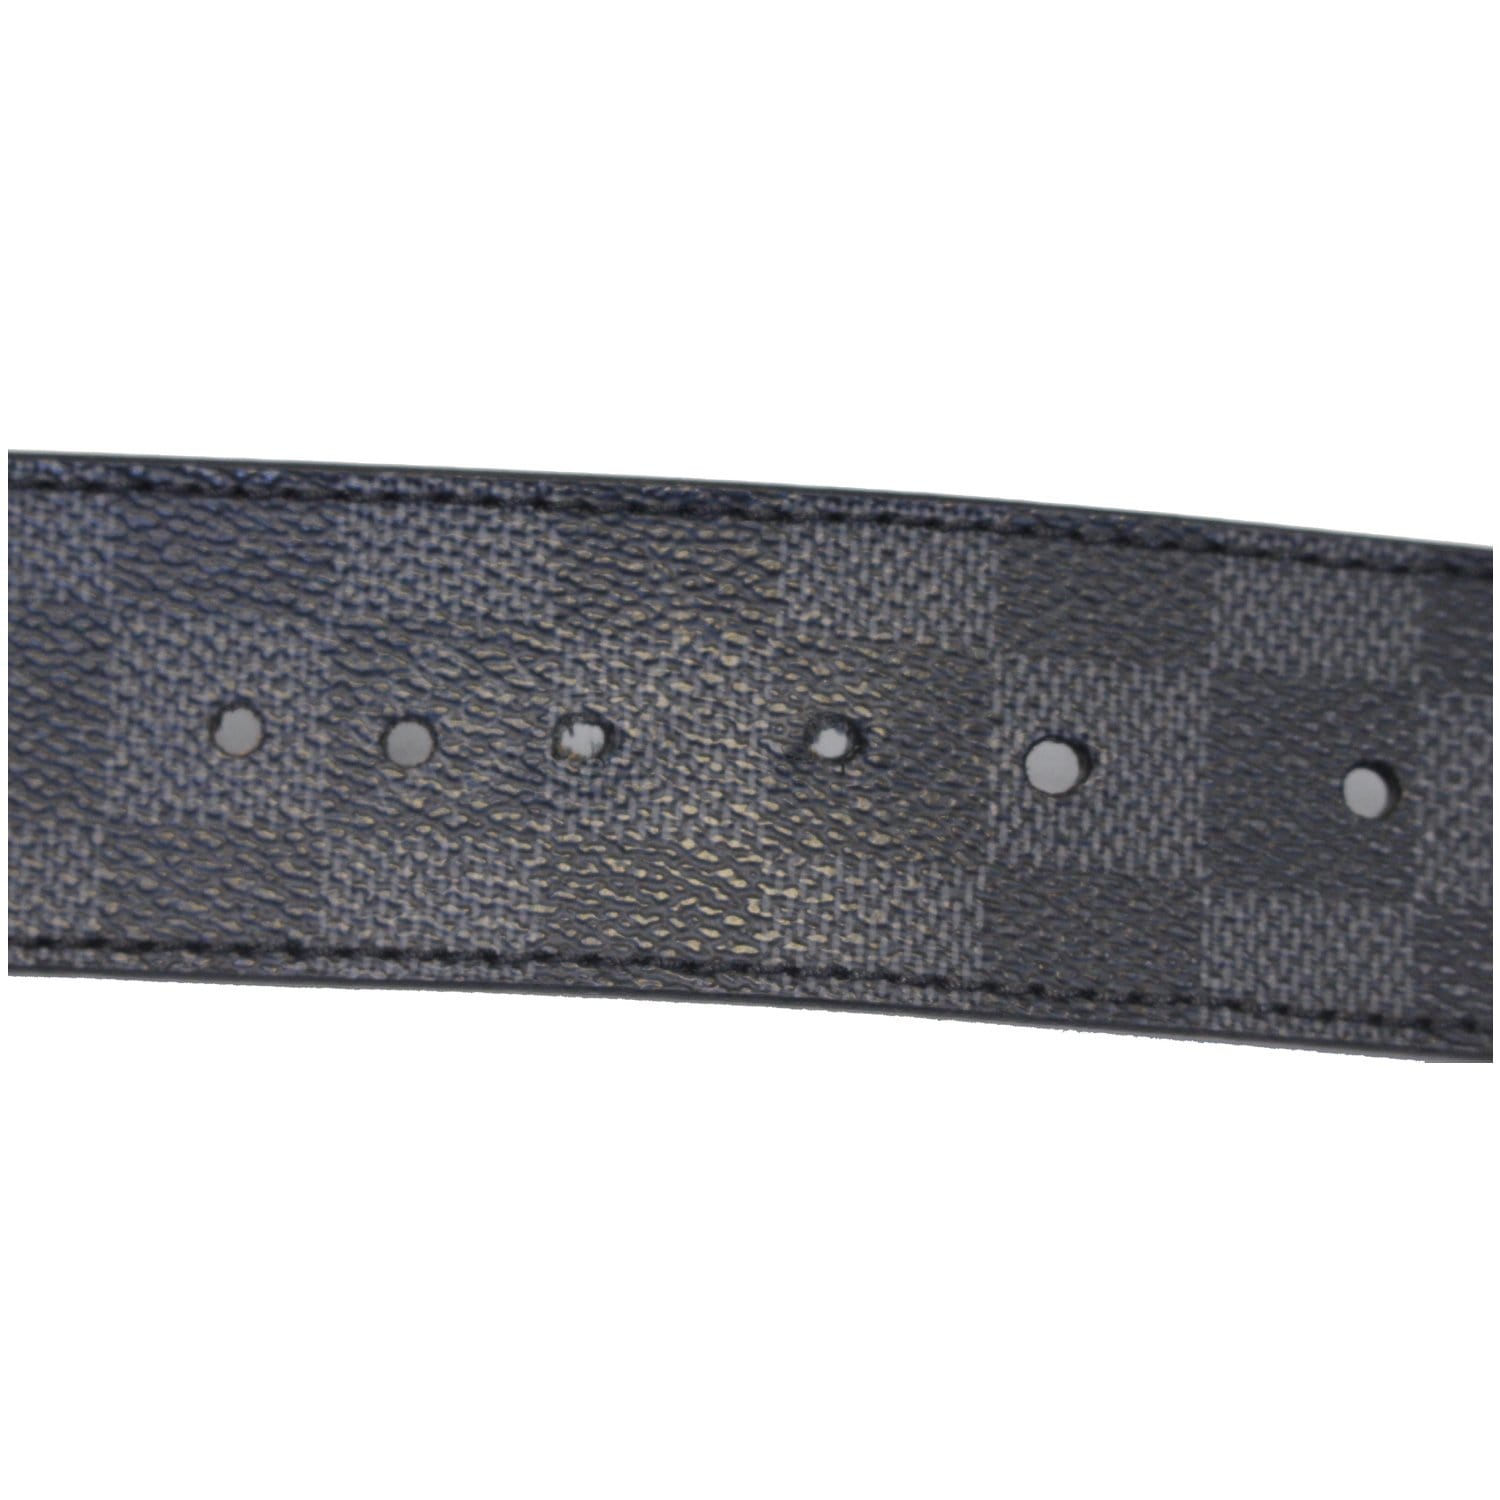 White LV logo Belt Damier Print  Louis vuitton belt, Leather